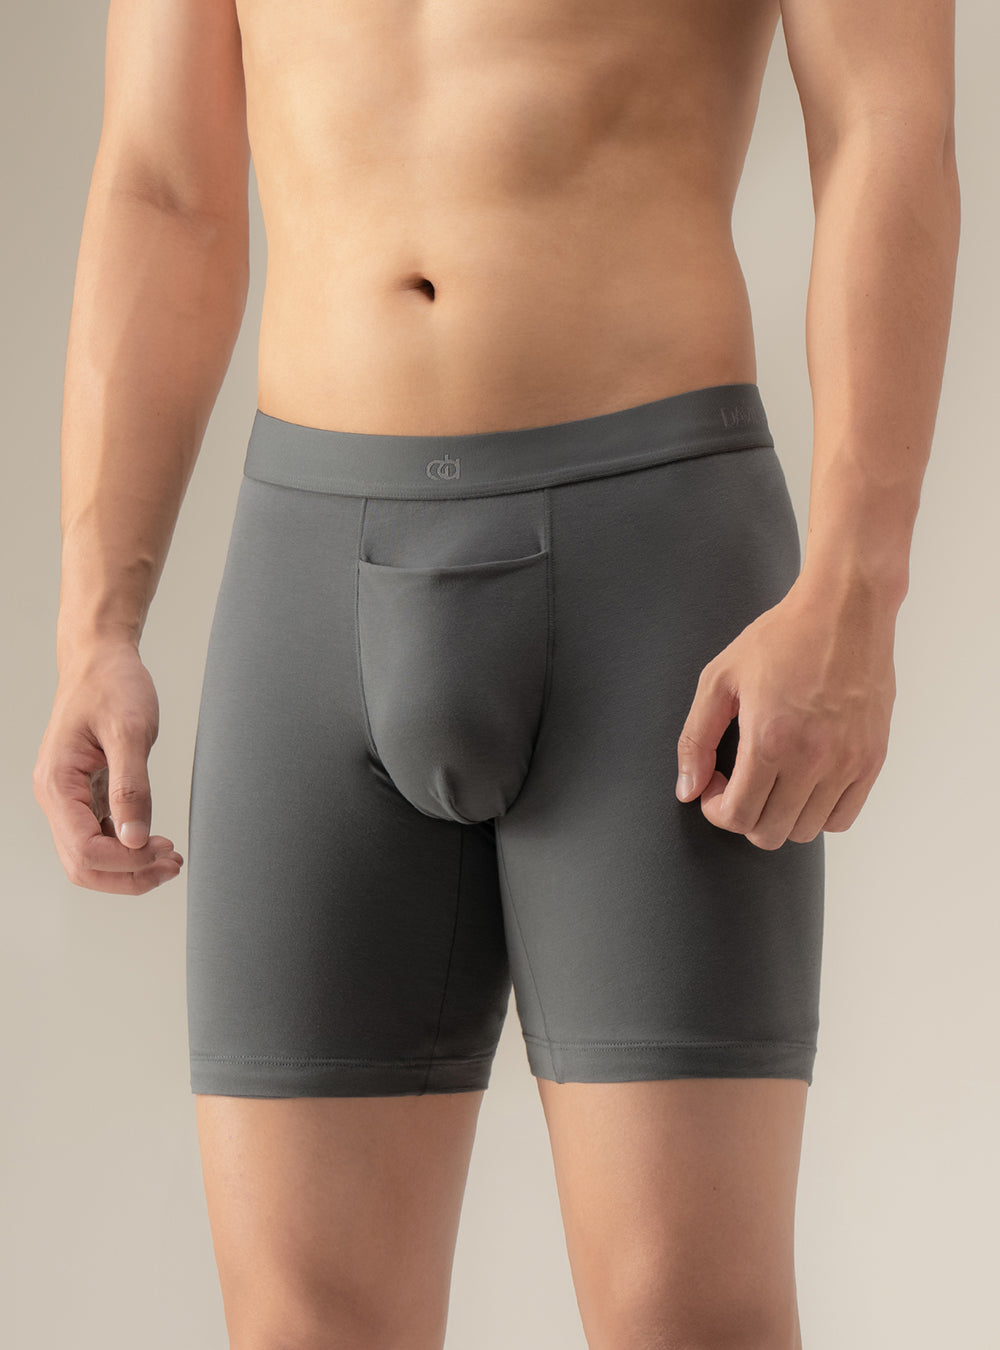 David Archy 3 Packs Super Soft Cotton Boxer Briefs Natural and  Skin-Friendly Men's Underwear